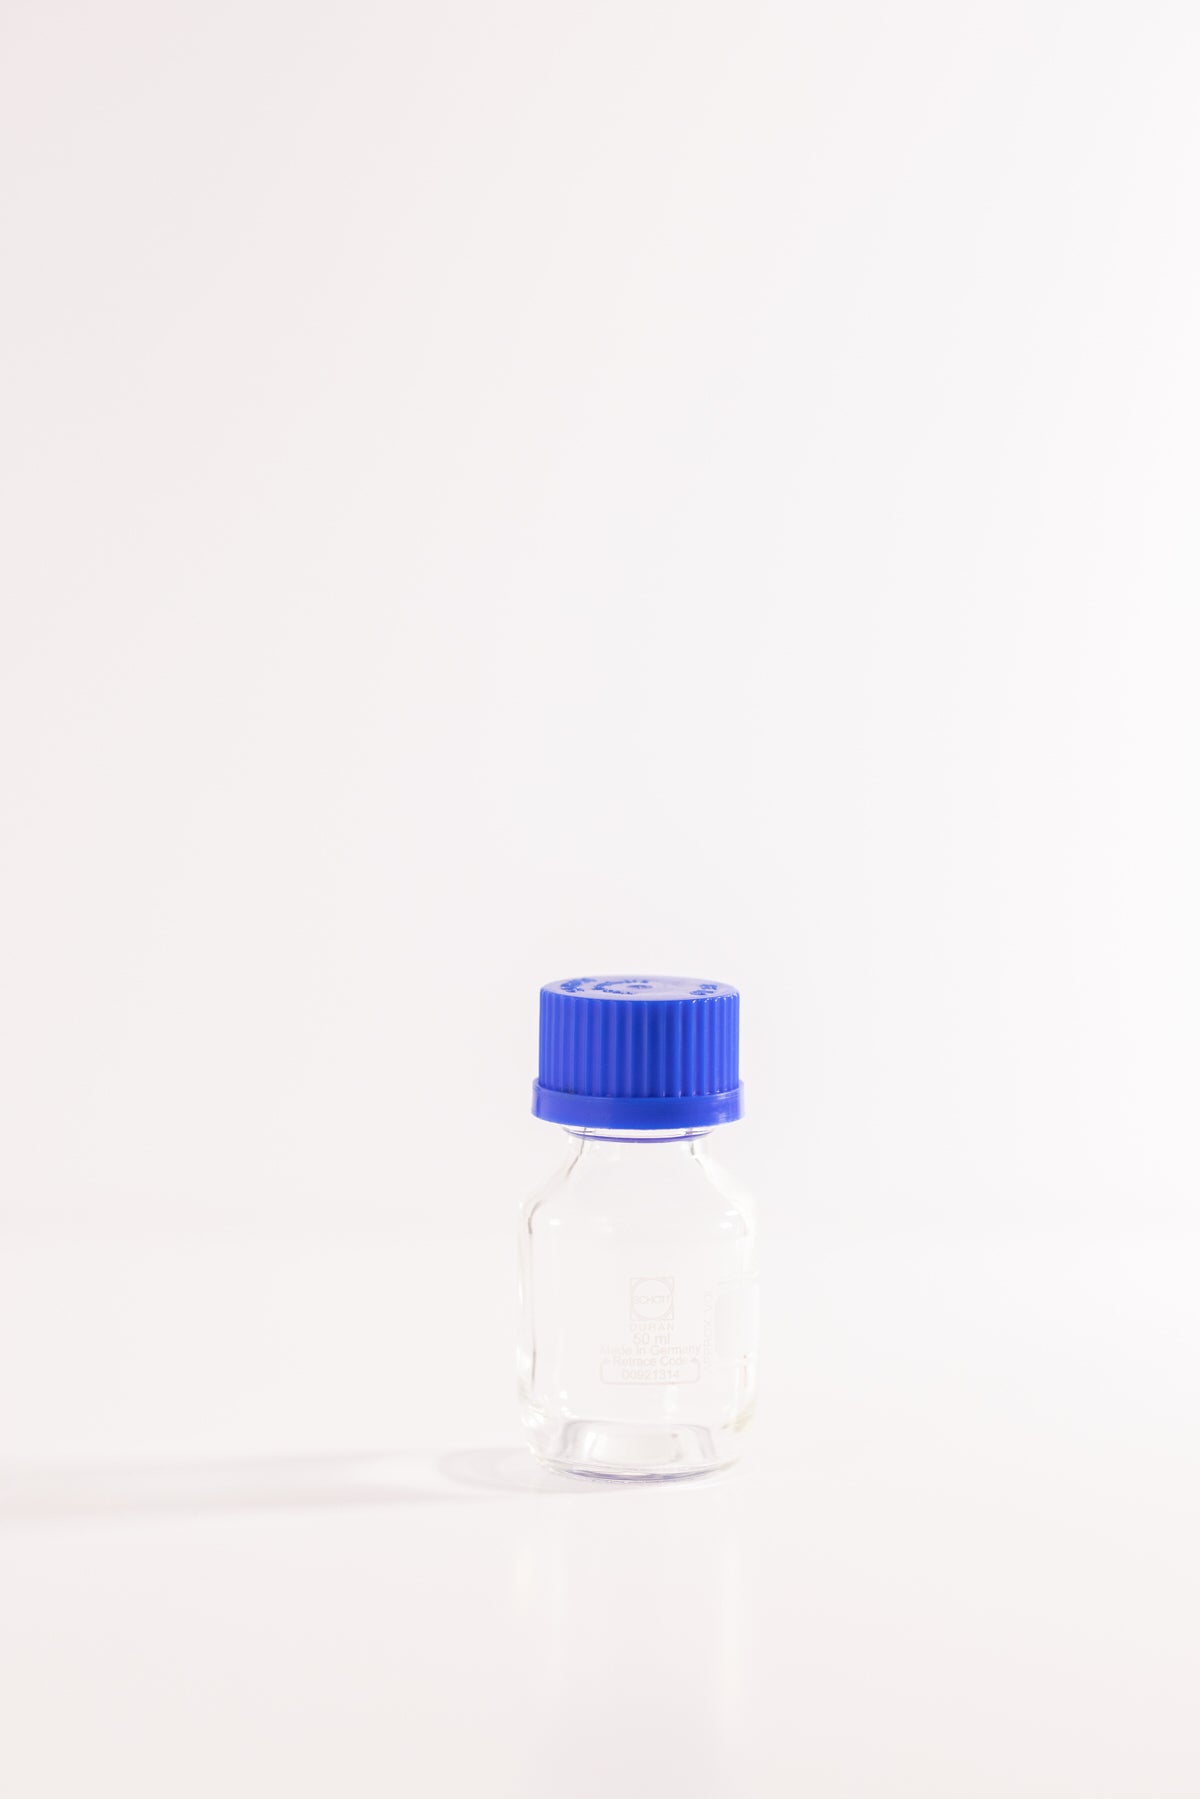 Schott Duran , Laboratory Bottle 50ml with GL45 Screw Cap Air Tight Seal